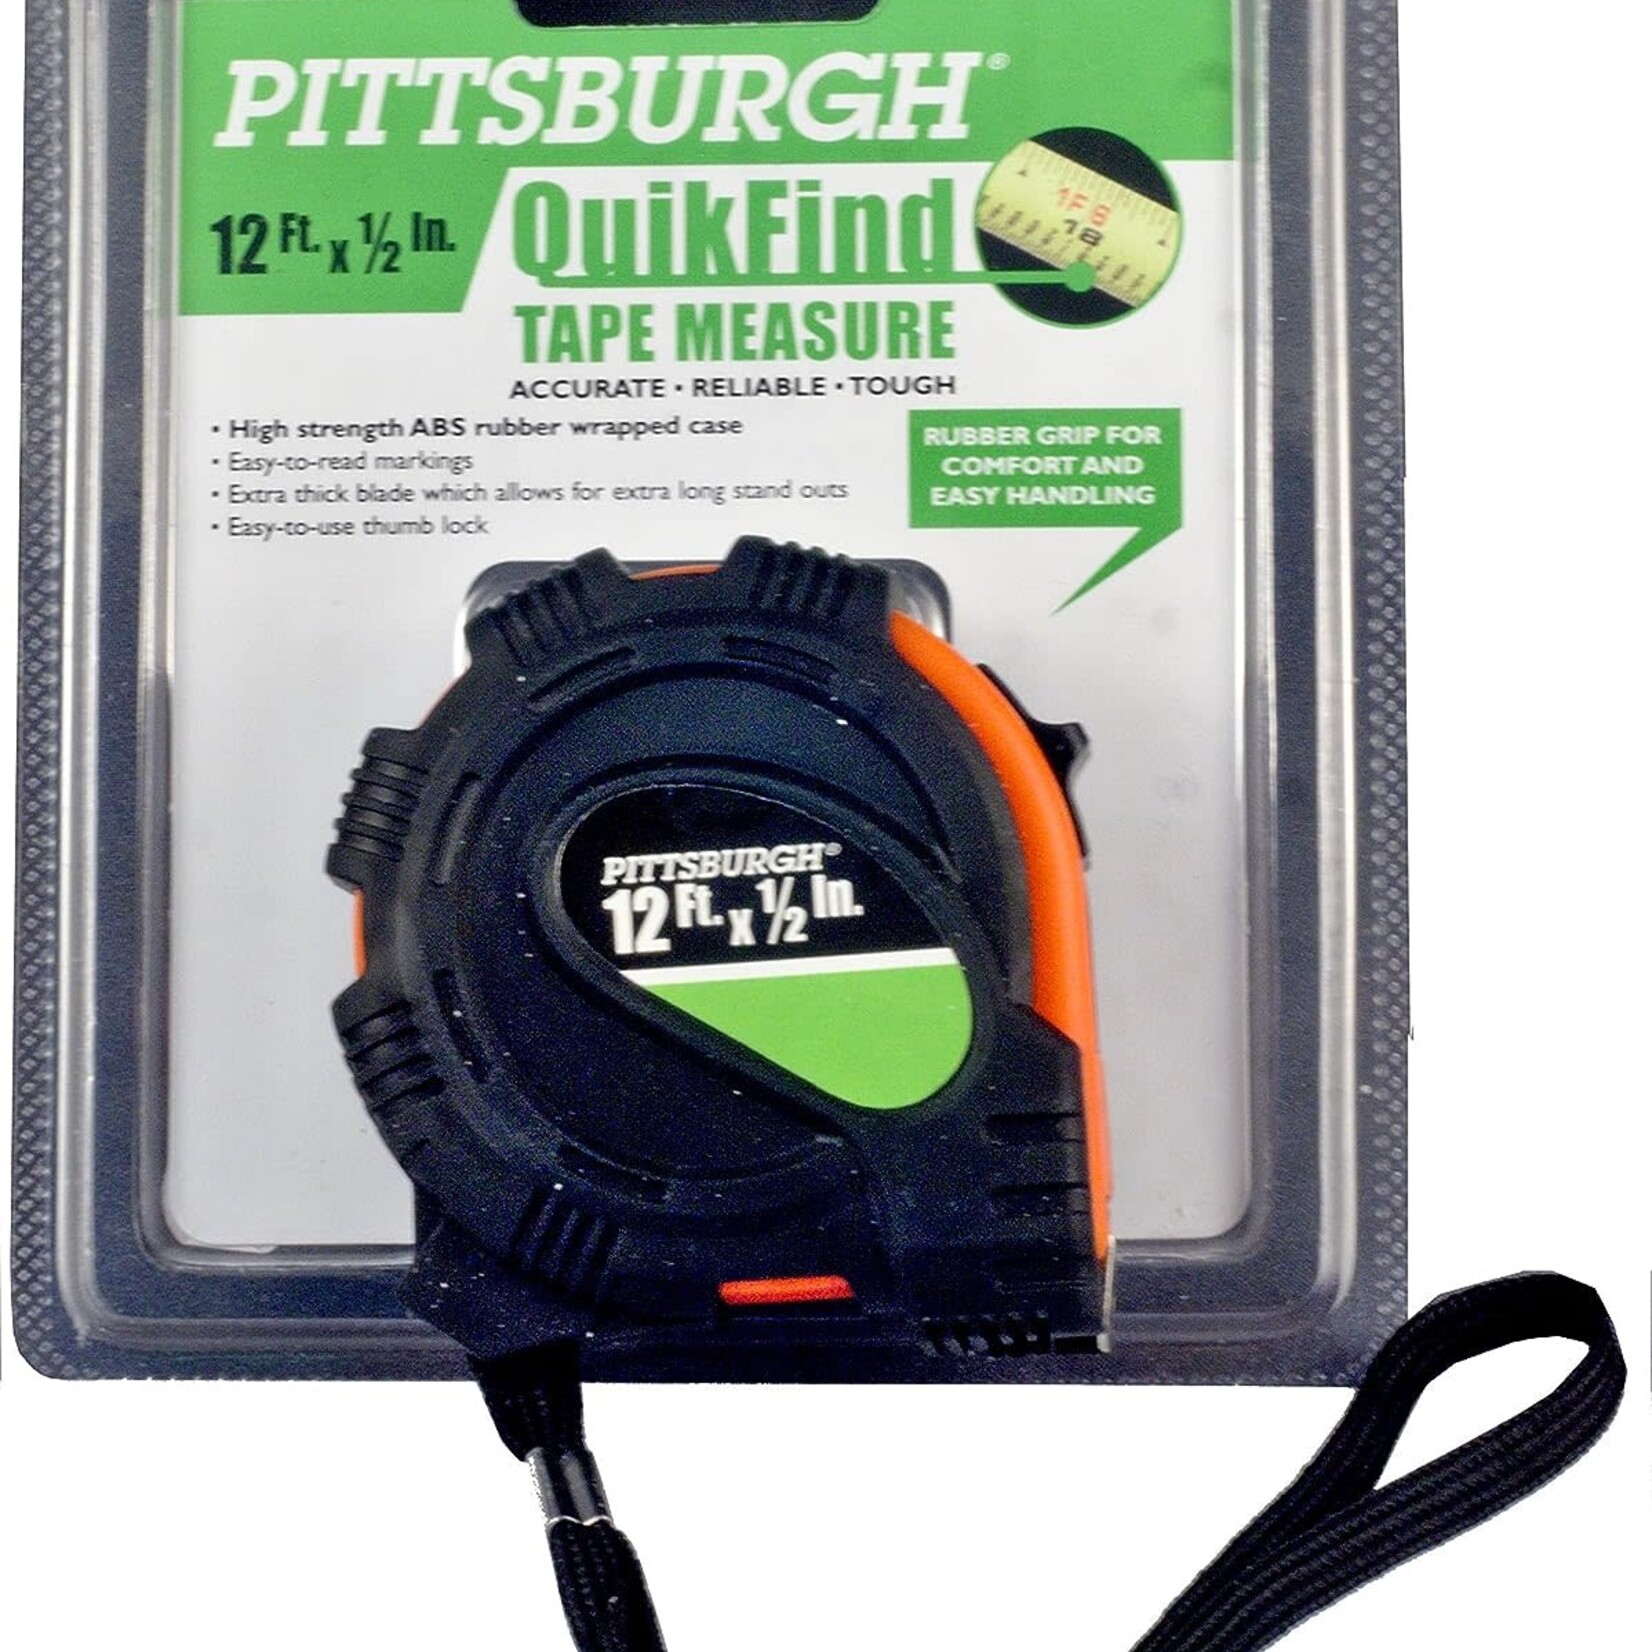 Pittsburgh QuikFind Tape Measure 12ft